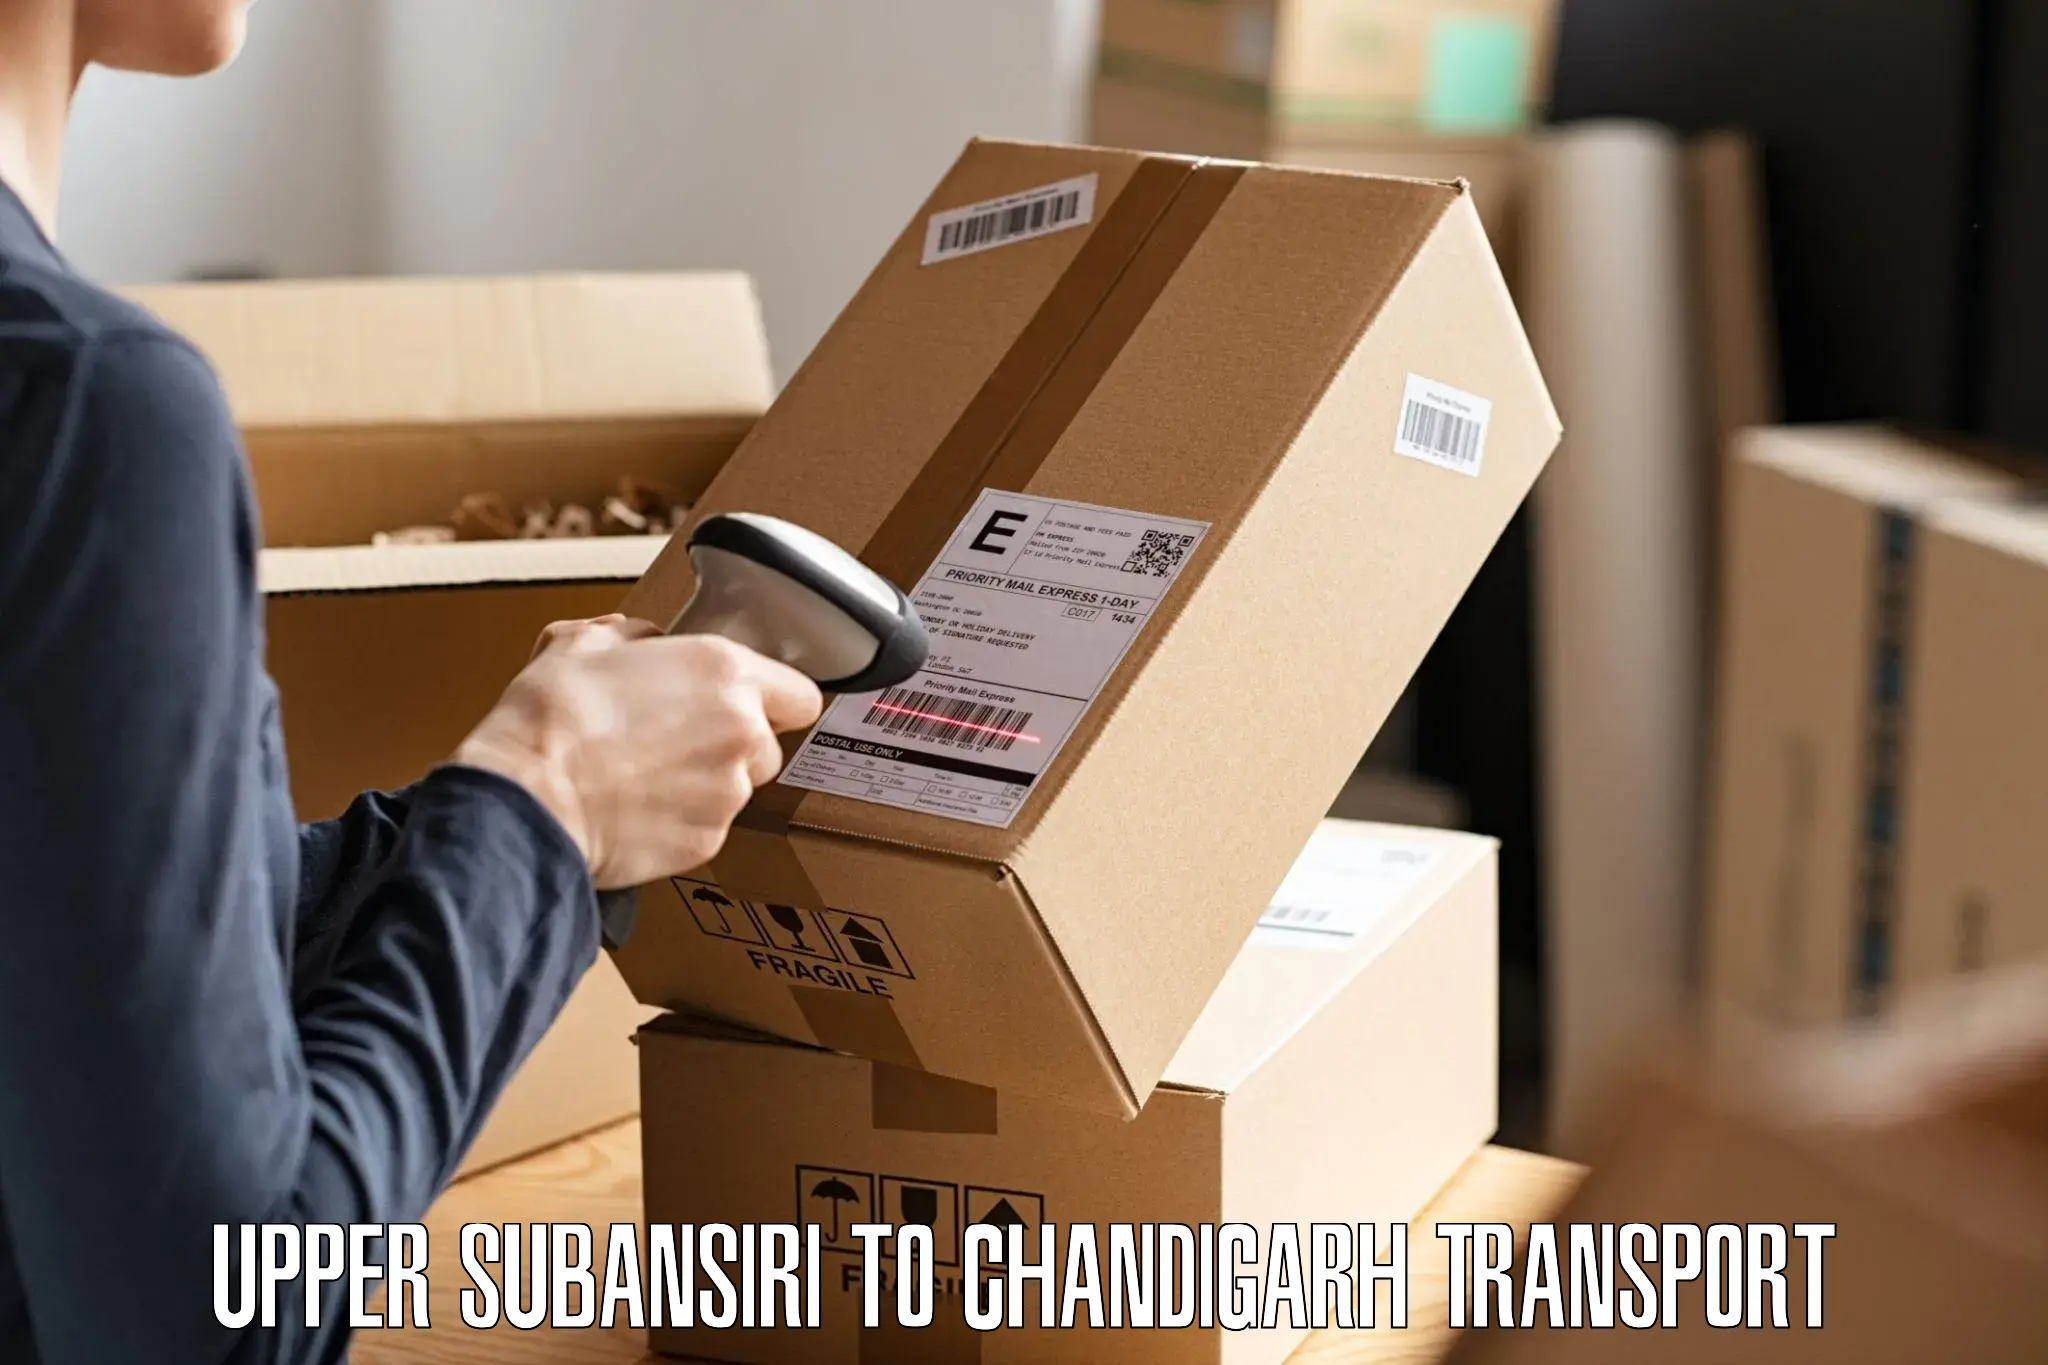 Furniture transport service Upper Subansiri to Chandigarh